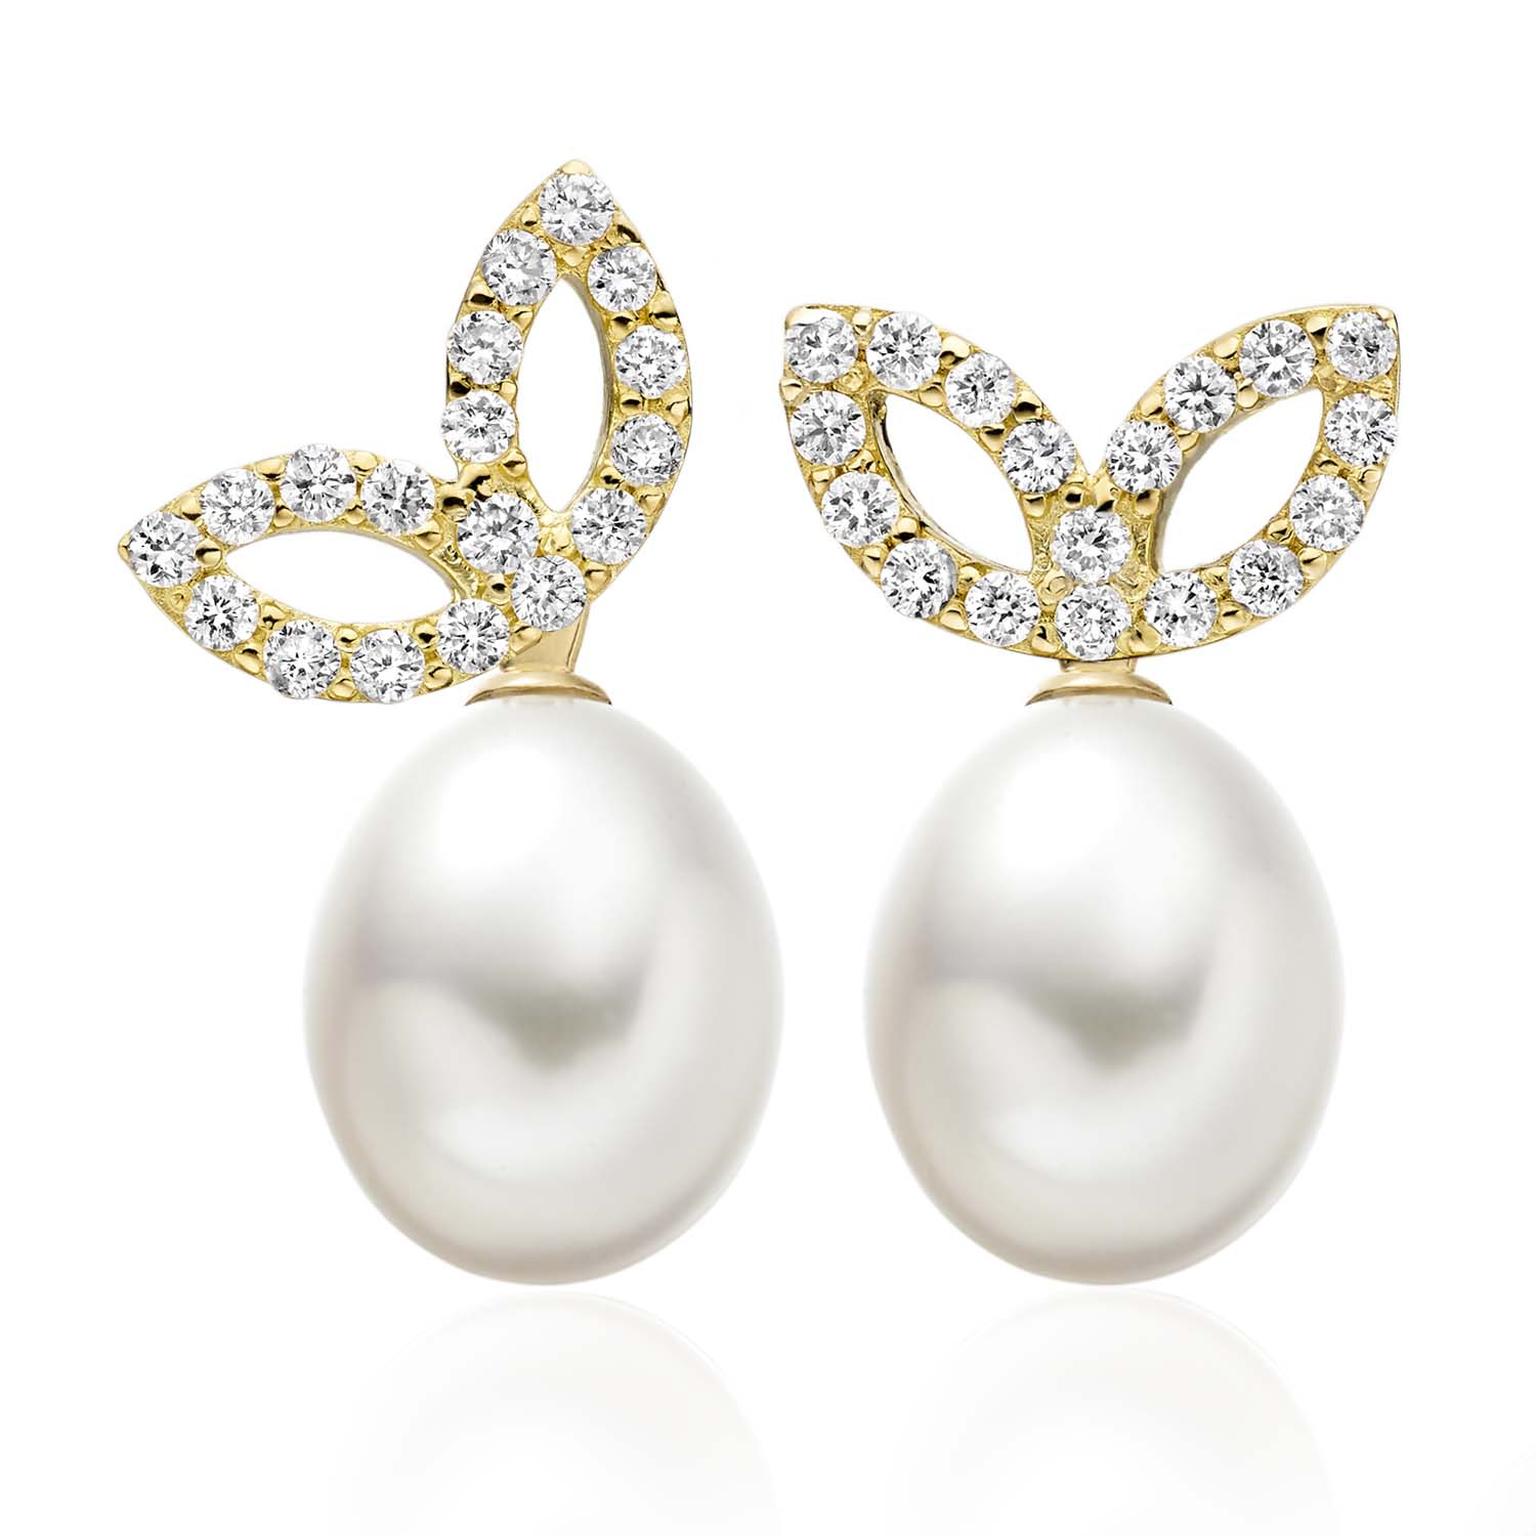 Lief Enchanted pearl earrings | Winterson | The Jewellery Editor